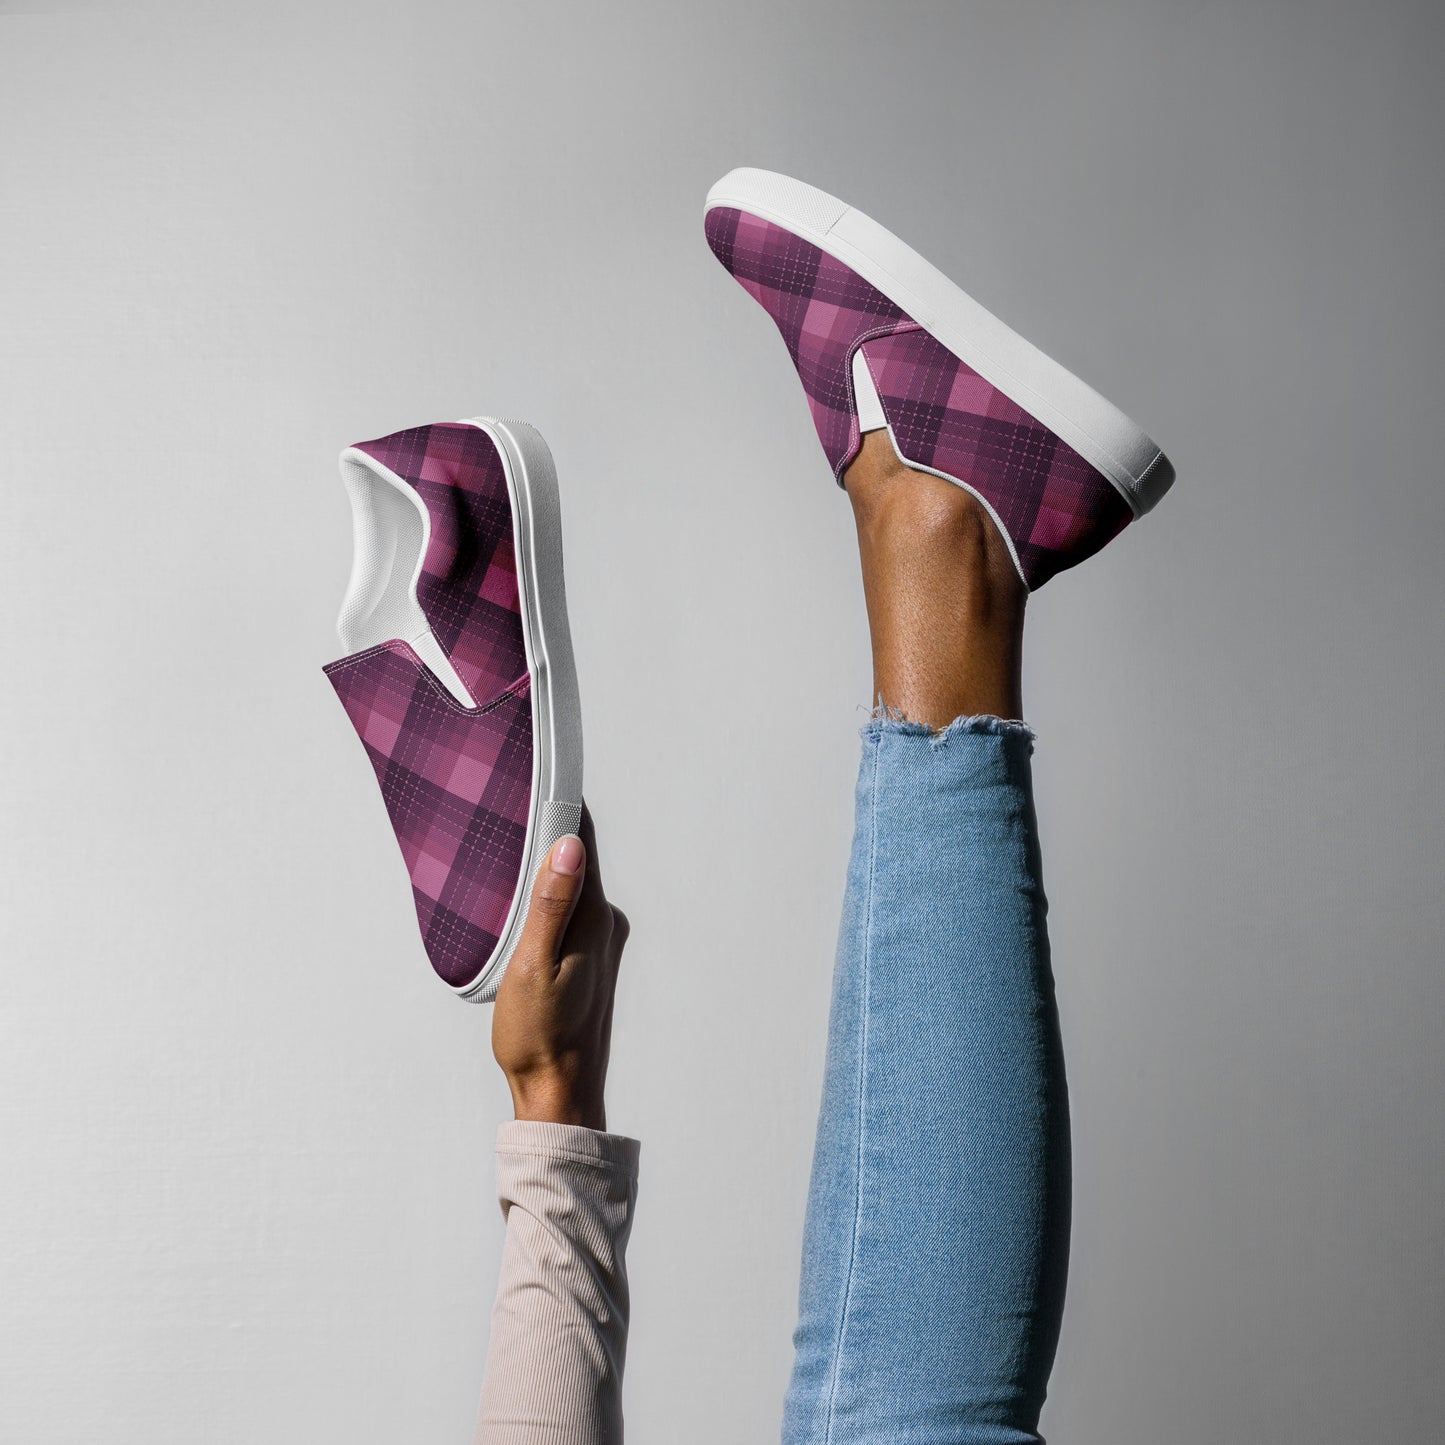 Check Purple slip-on canvas shoes